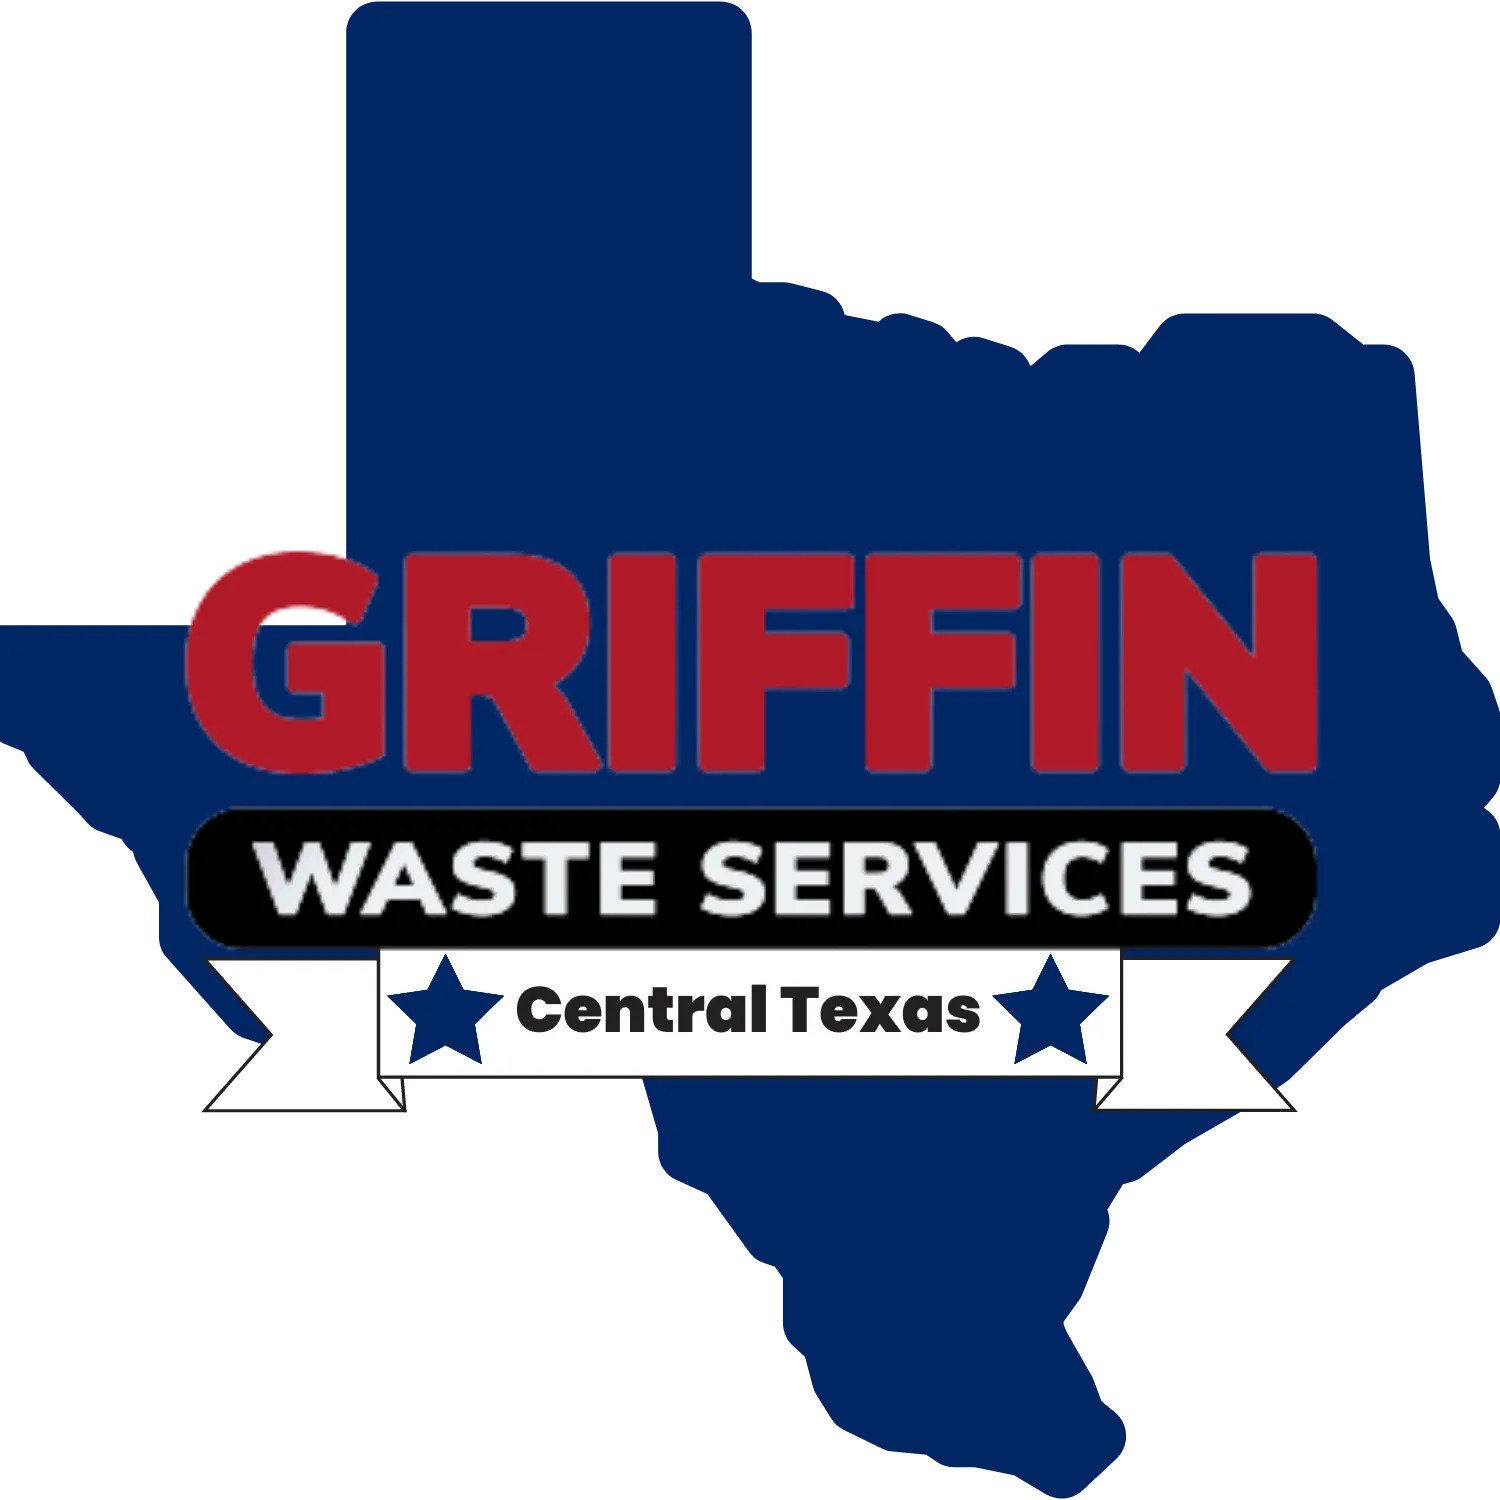 griffin-waste-services-central-texas-logo.jpg